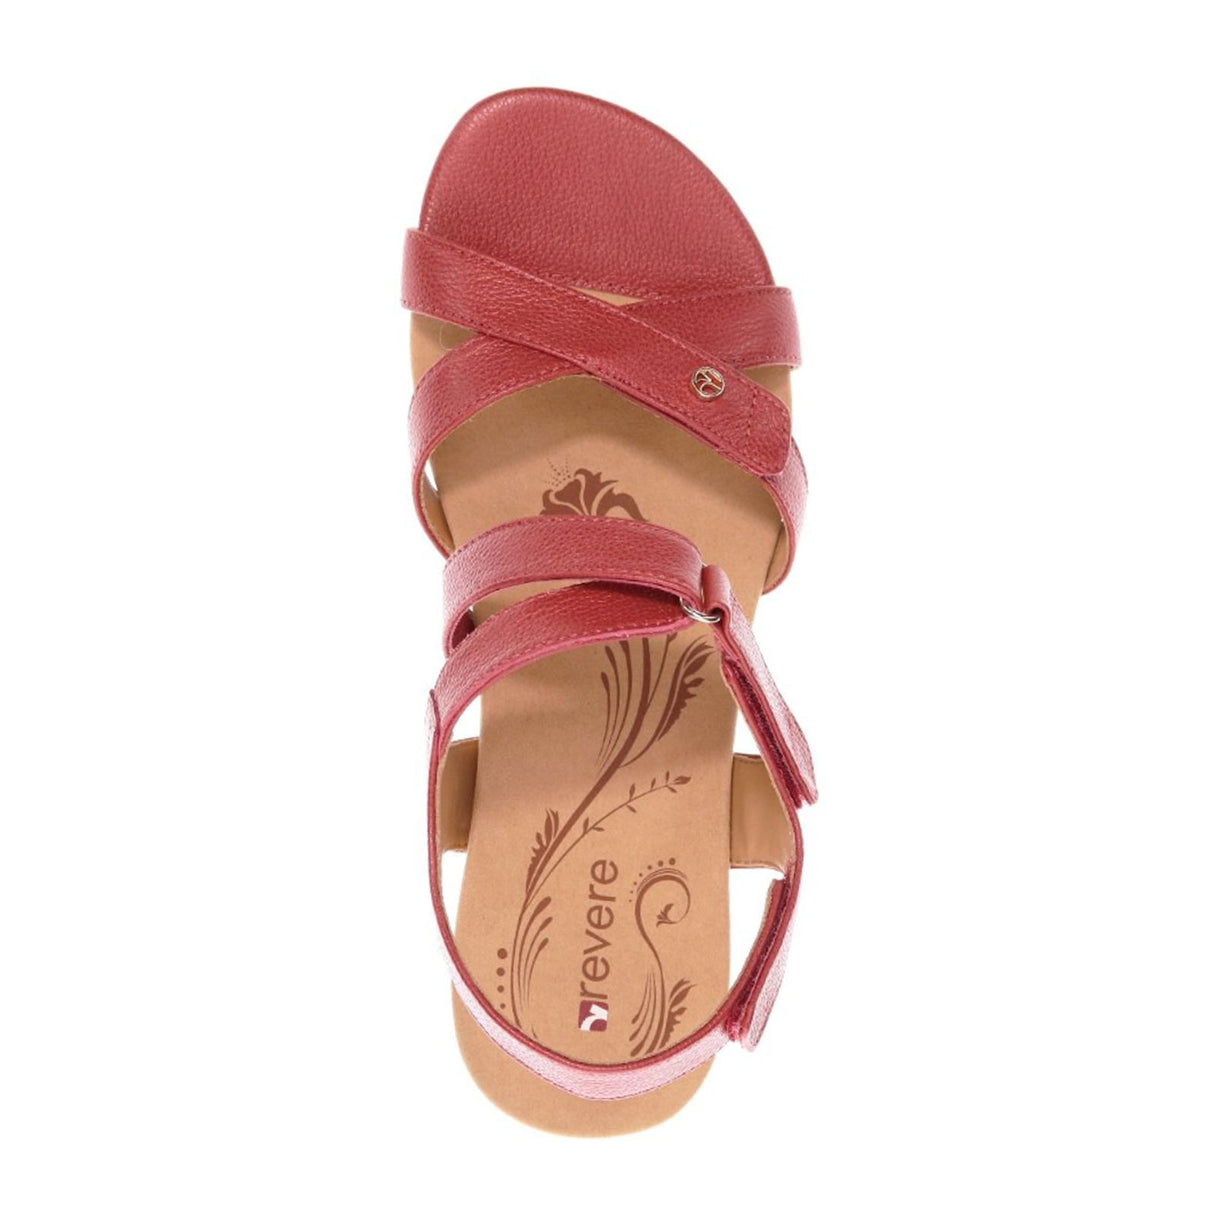 Revere Casablanca Wedge Sandal (Women) - Ruby Metallic Sandals - Heel/Wedge - The Heel Shoe Fitters